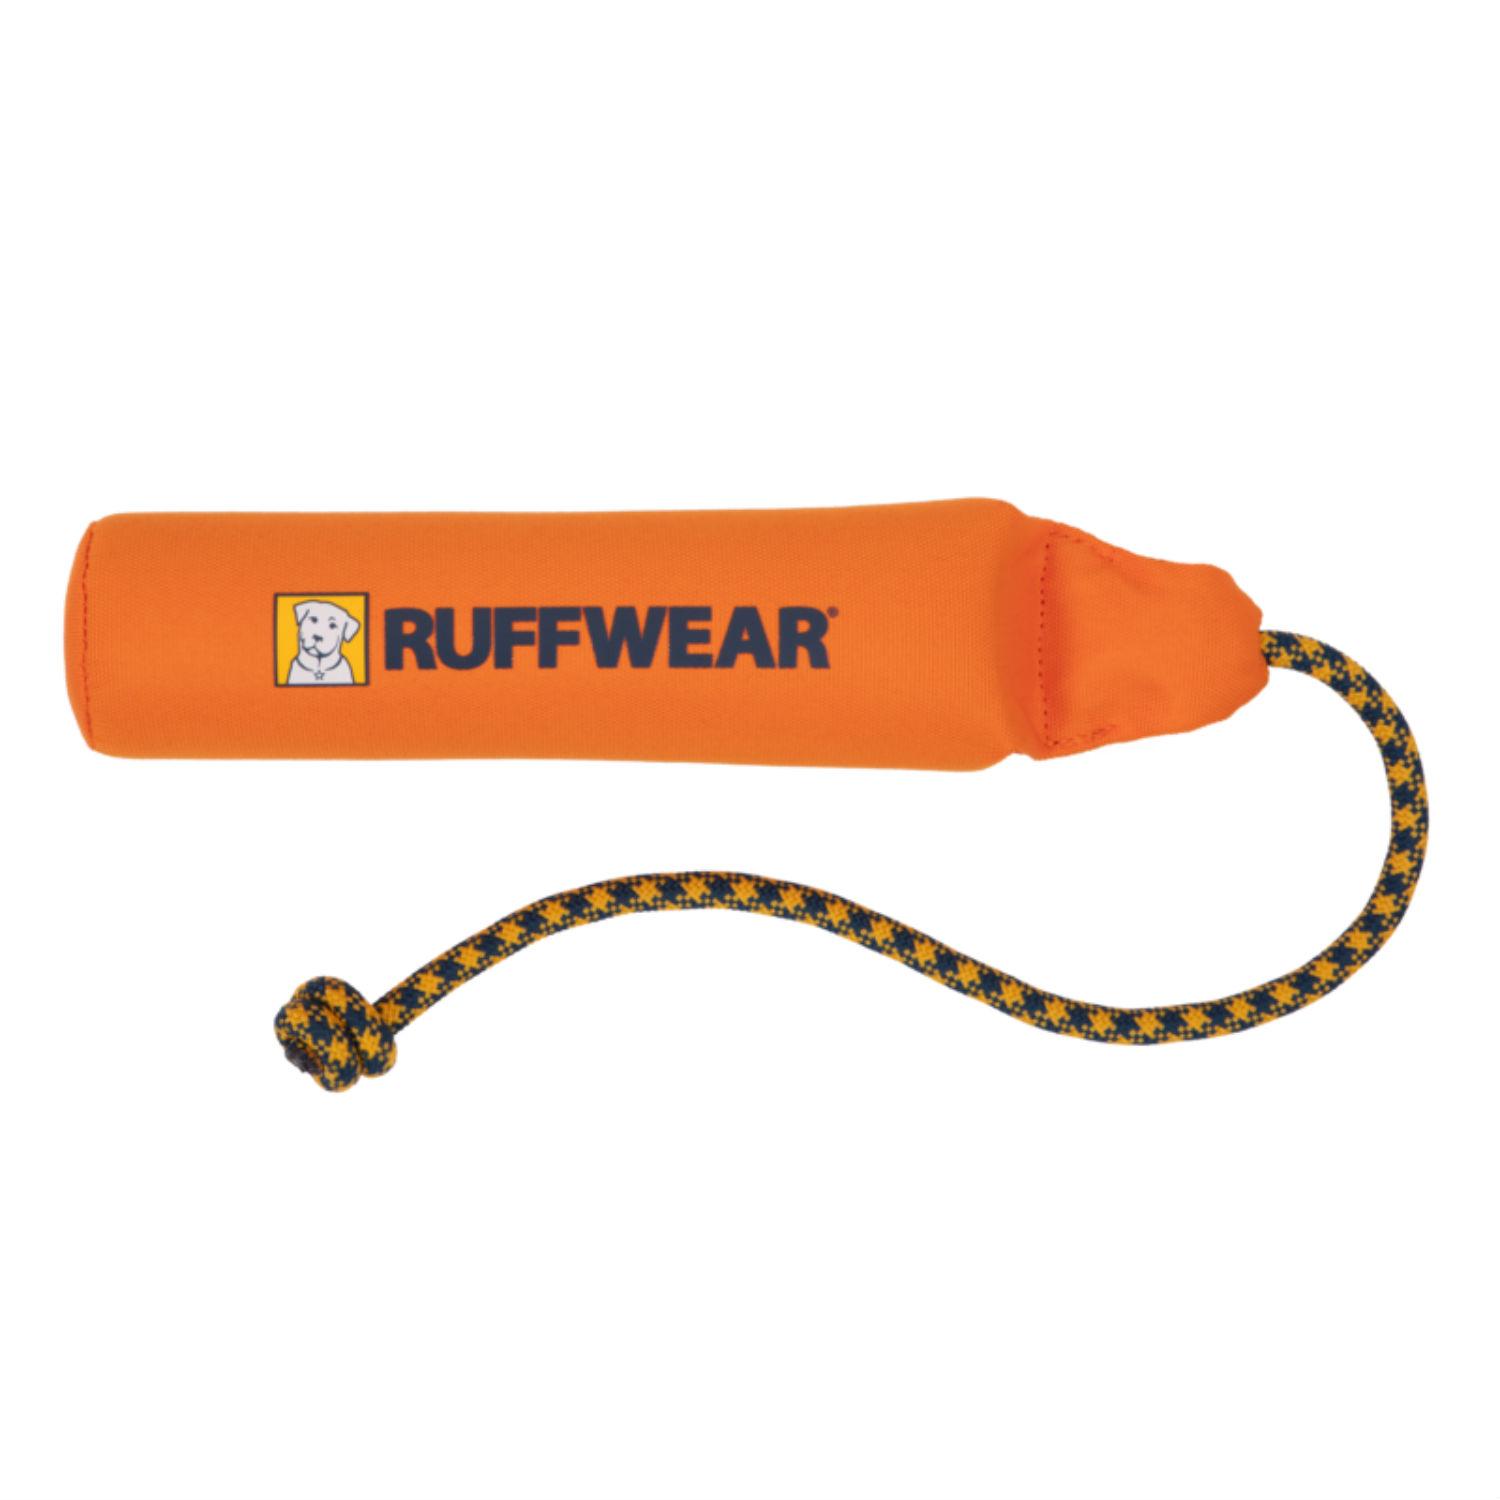 Lunker Interactive Dog Toy by Ruffwear - Campfire Orange